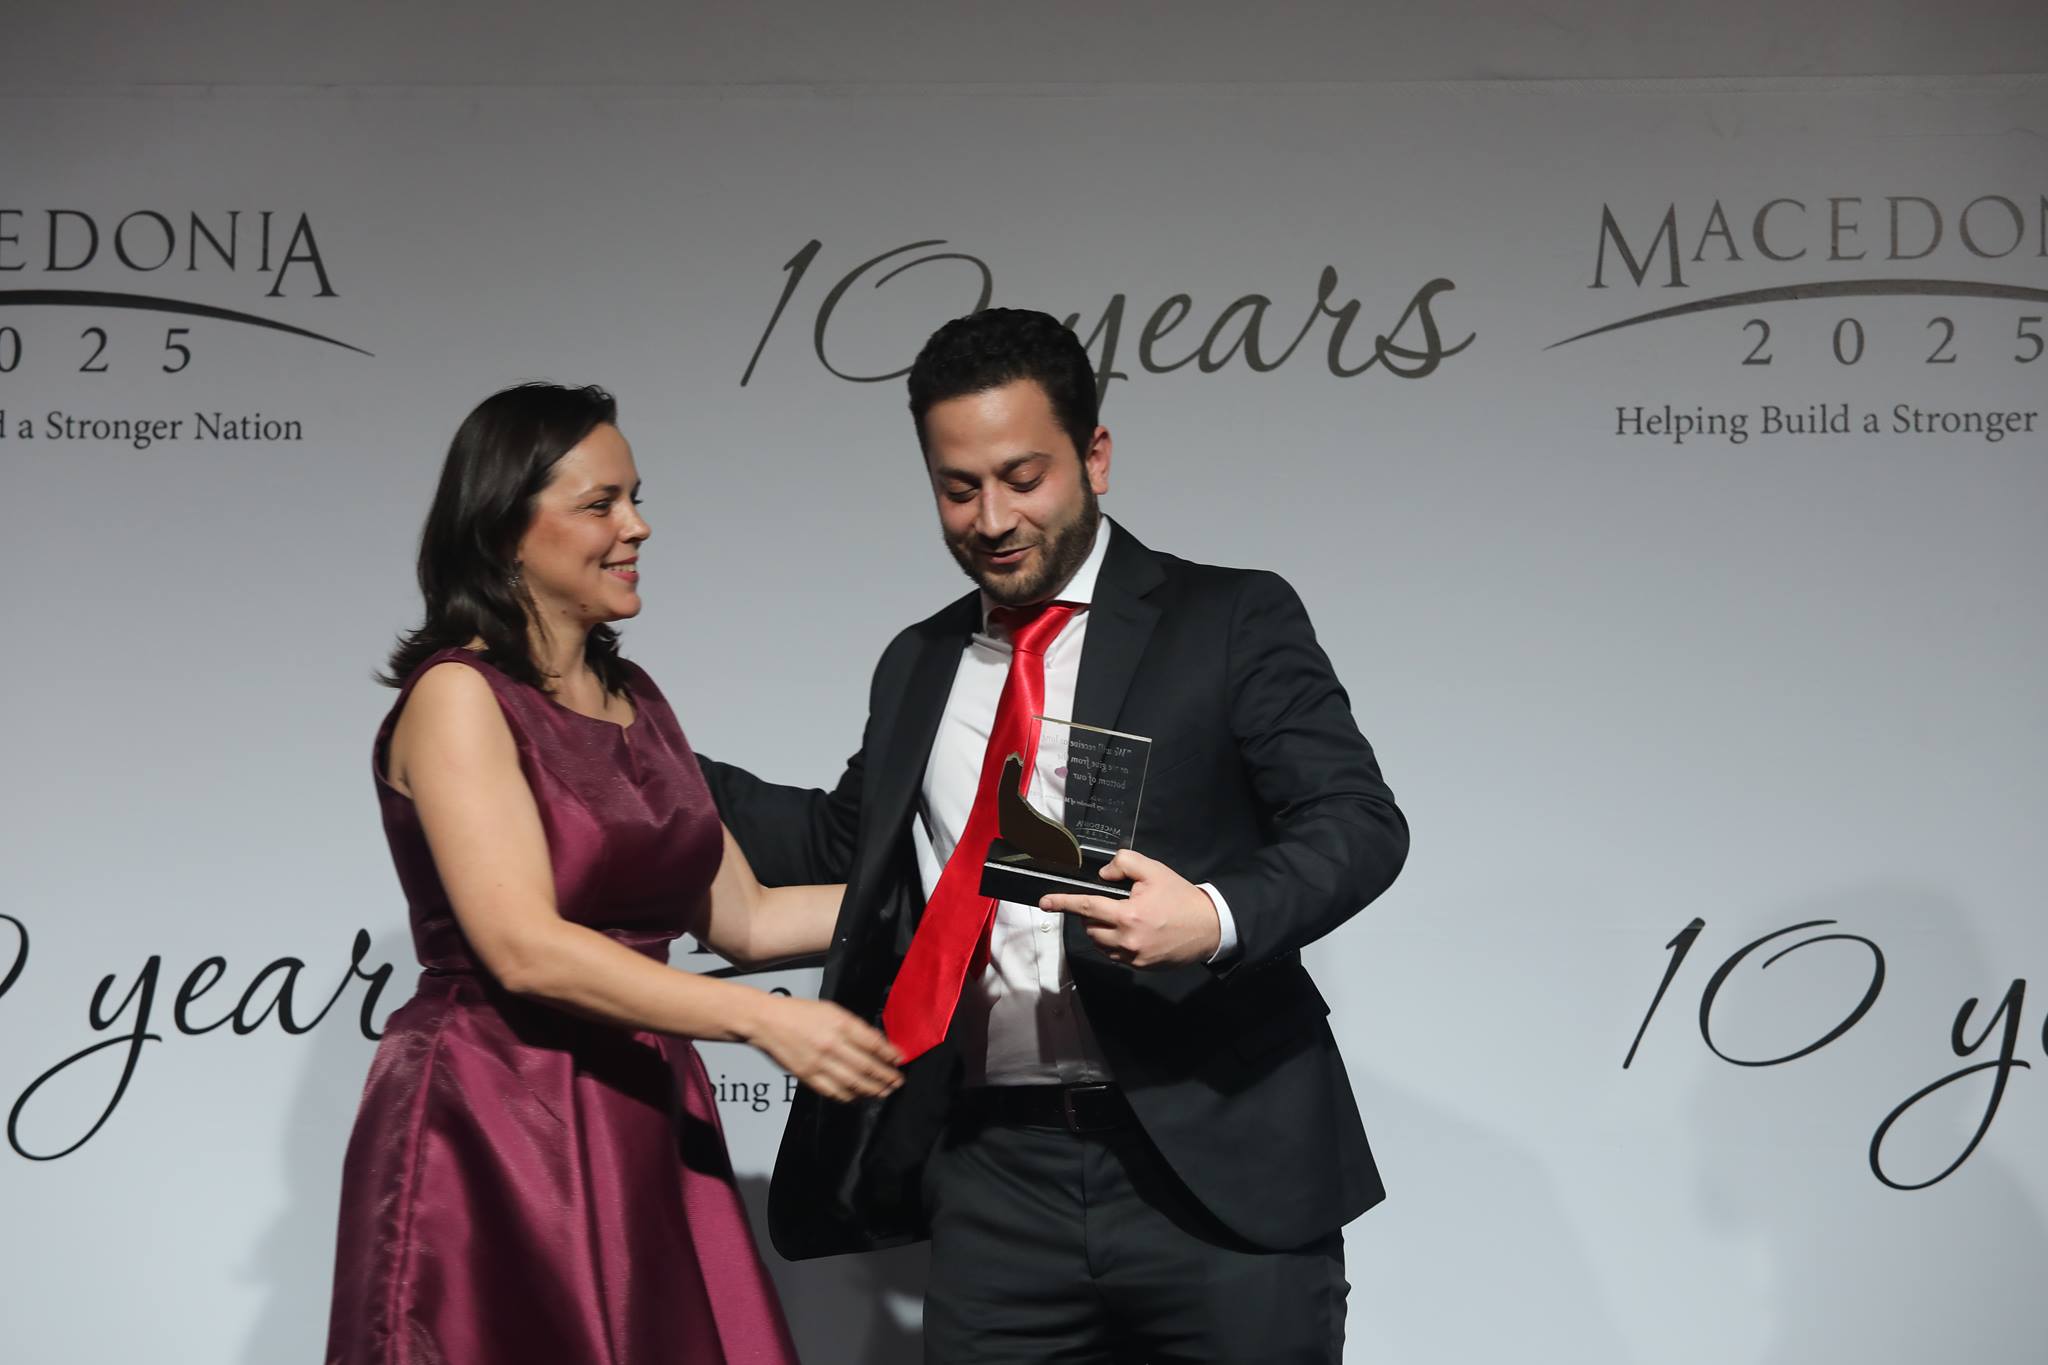 Receiving recognition award at Macedonia 2025 Summit 2018